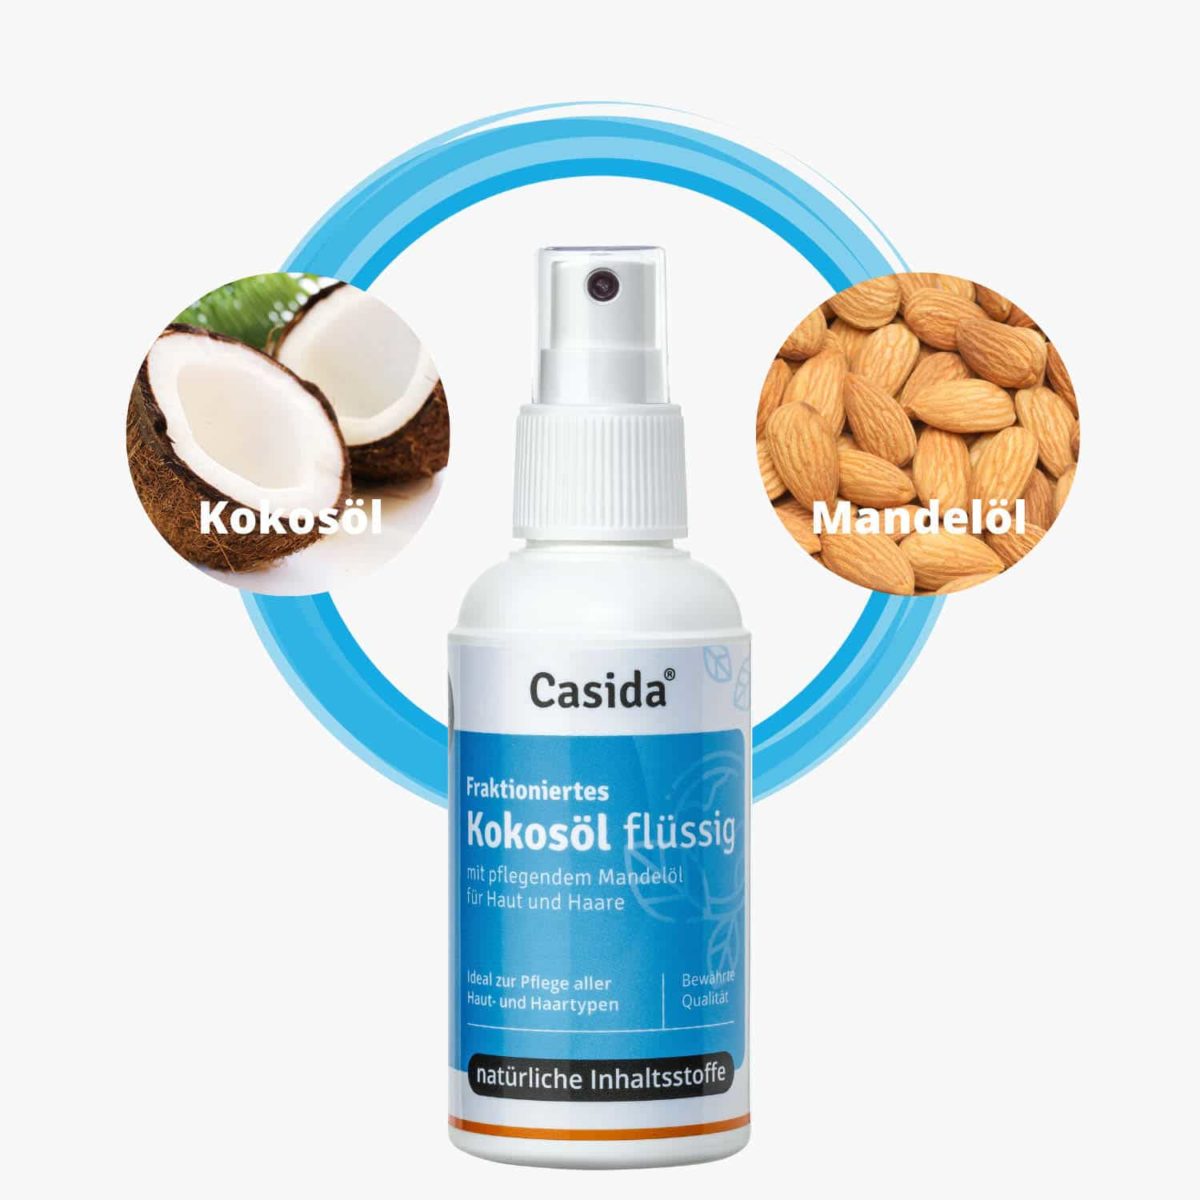 Casida Kokosöl flüssig Haut & Haare – 100 ml 11108255 PZN Apotheke Mandelöl Massage trockene Haut pflegen natürlich3